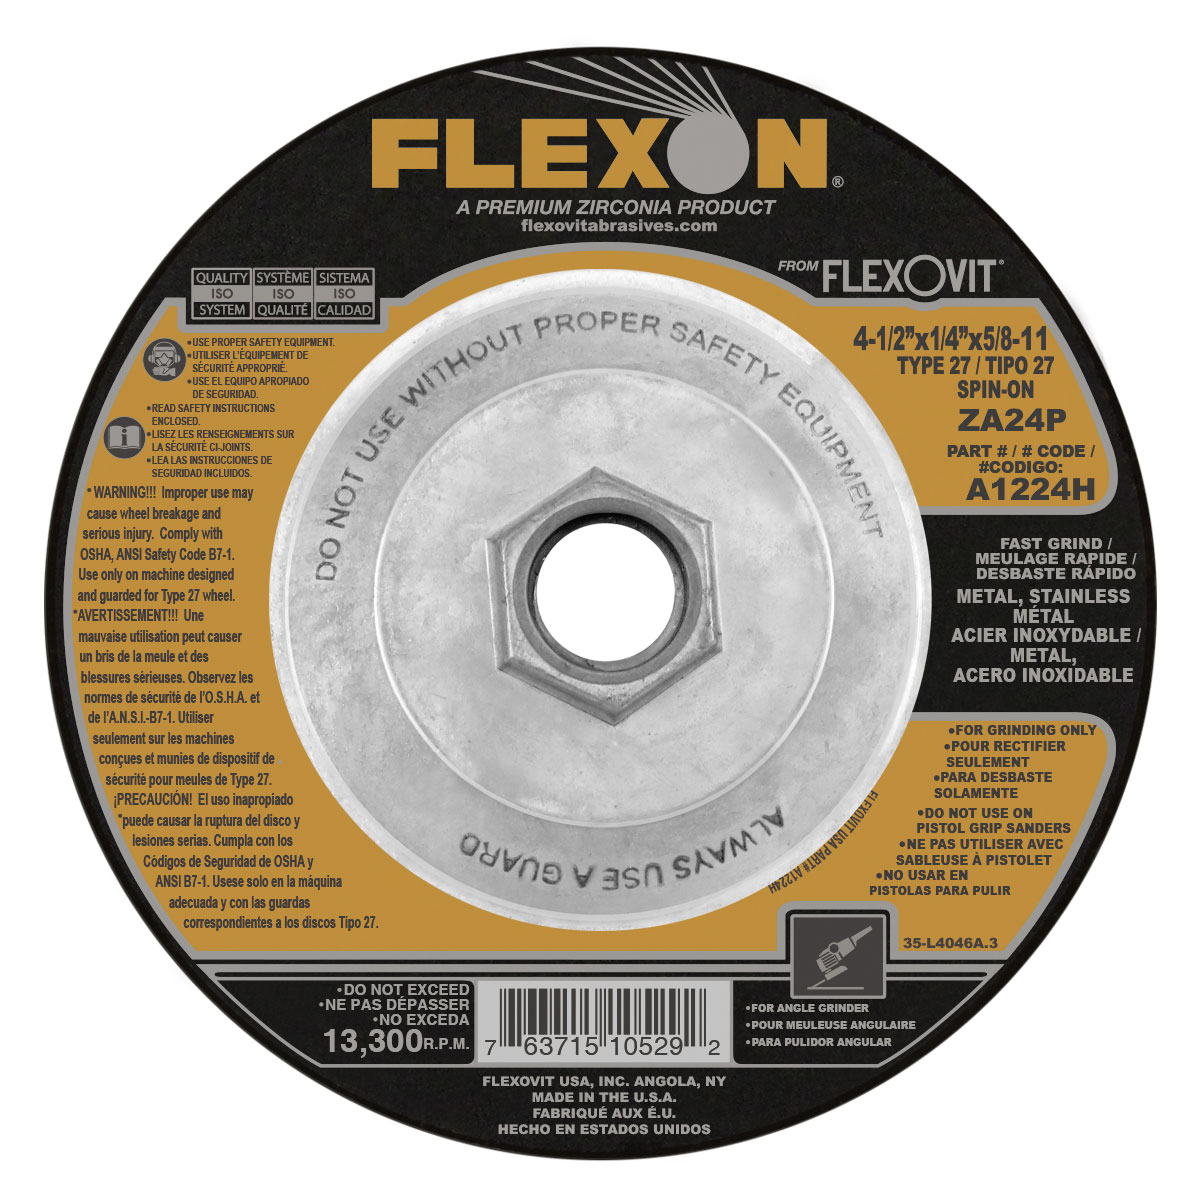 27 A1224H, Flexovit On Grinding Item USA, Type Wheel #